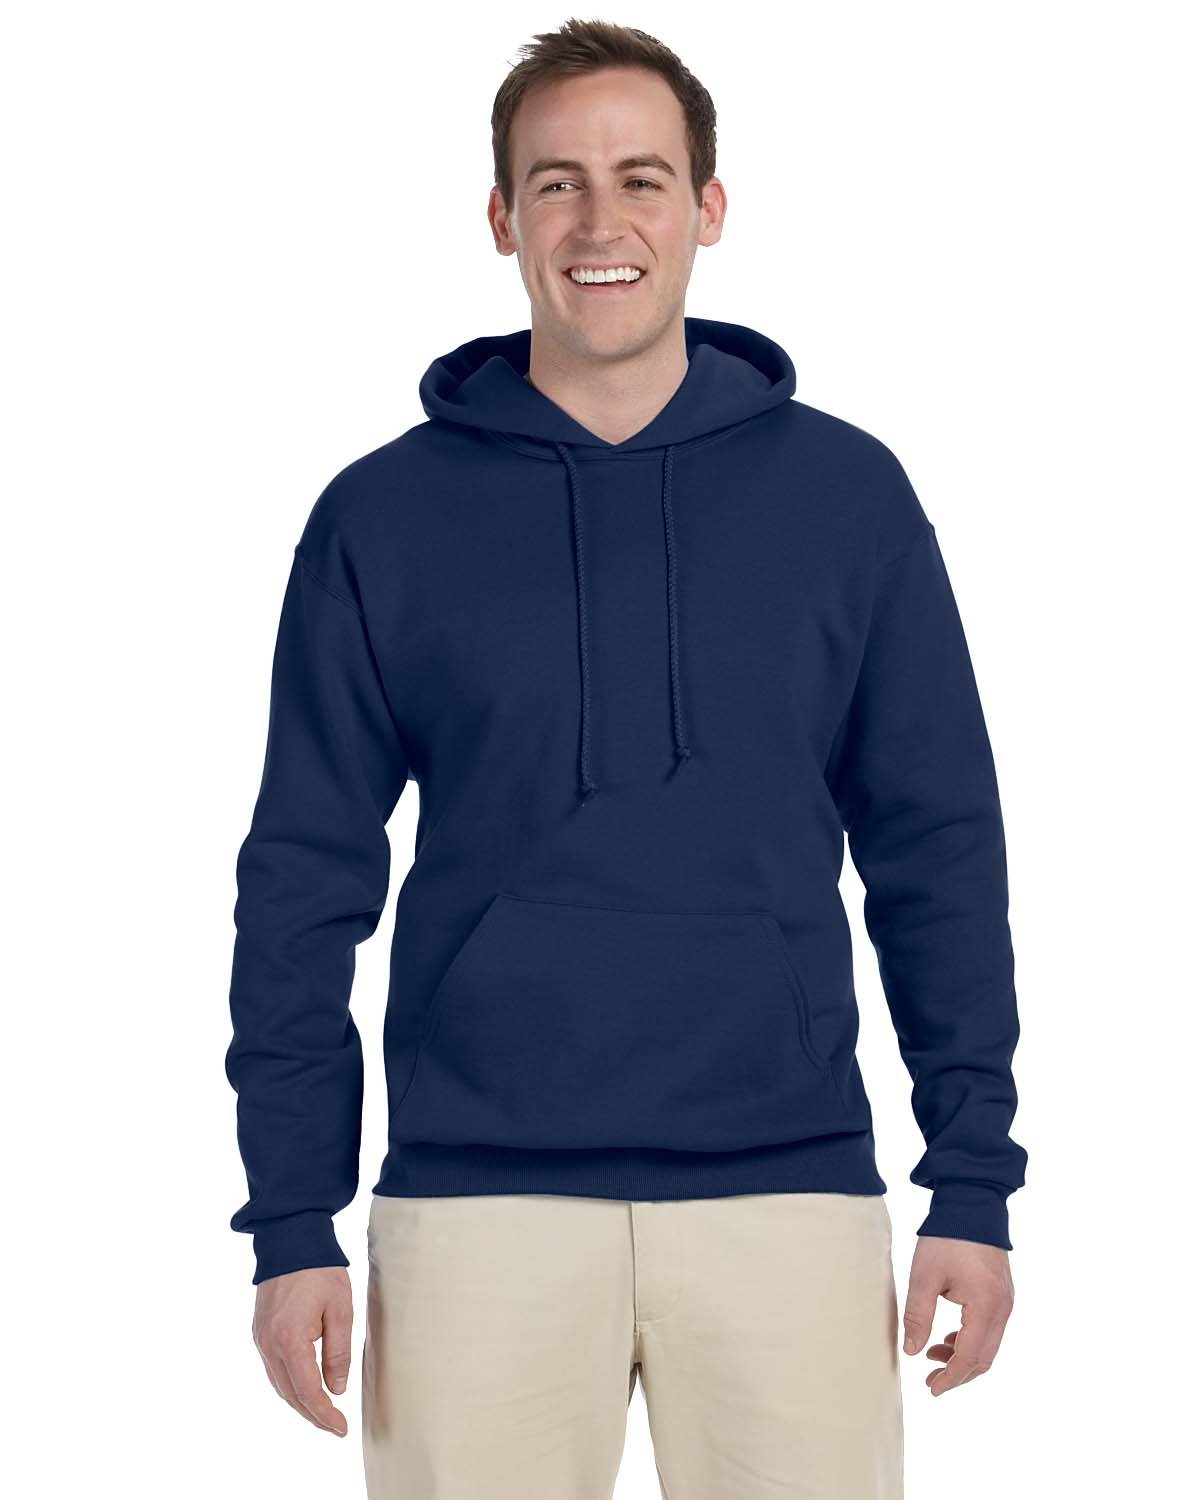 ShirtSpace 996 | NuBlend | Sweatshirt Pullover Hooded ® Jerzees